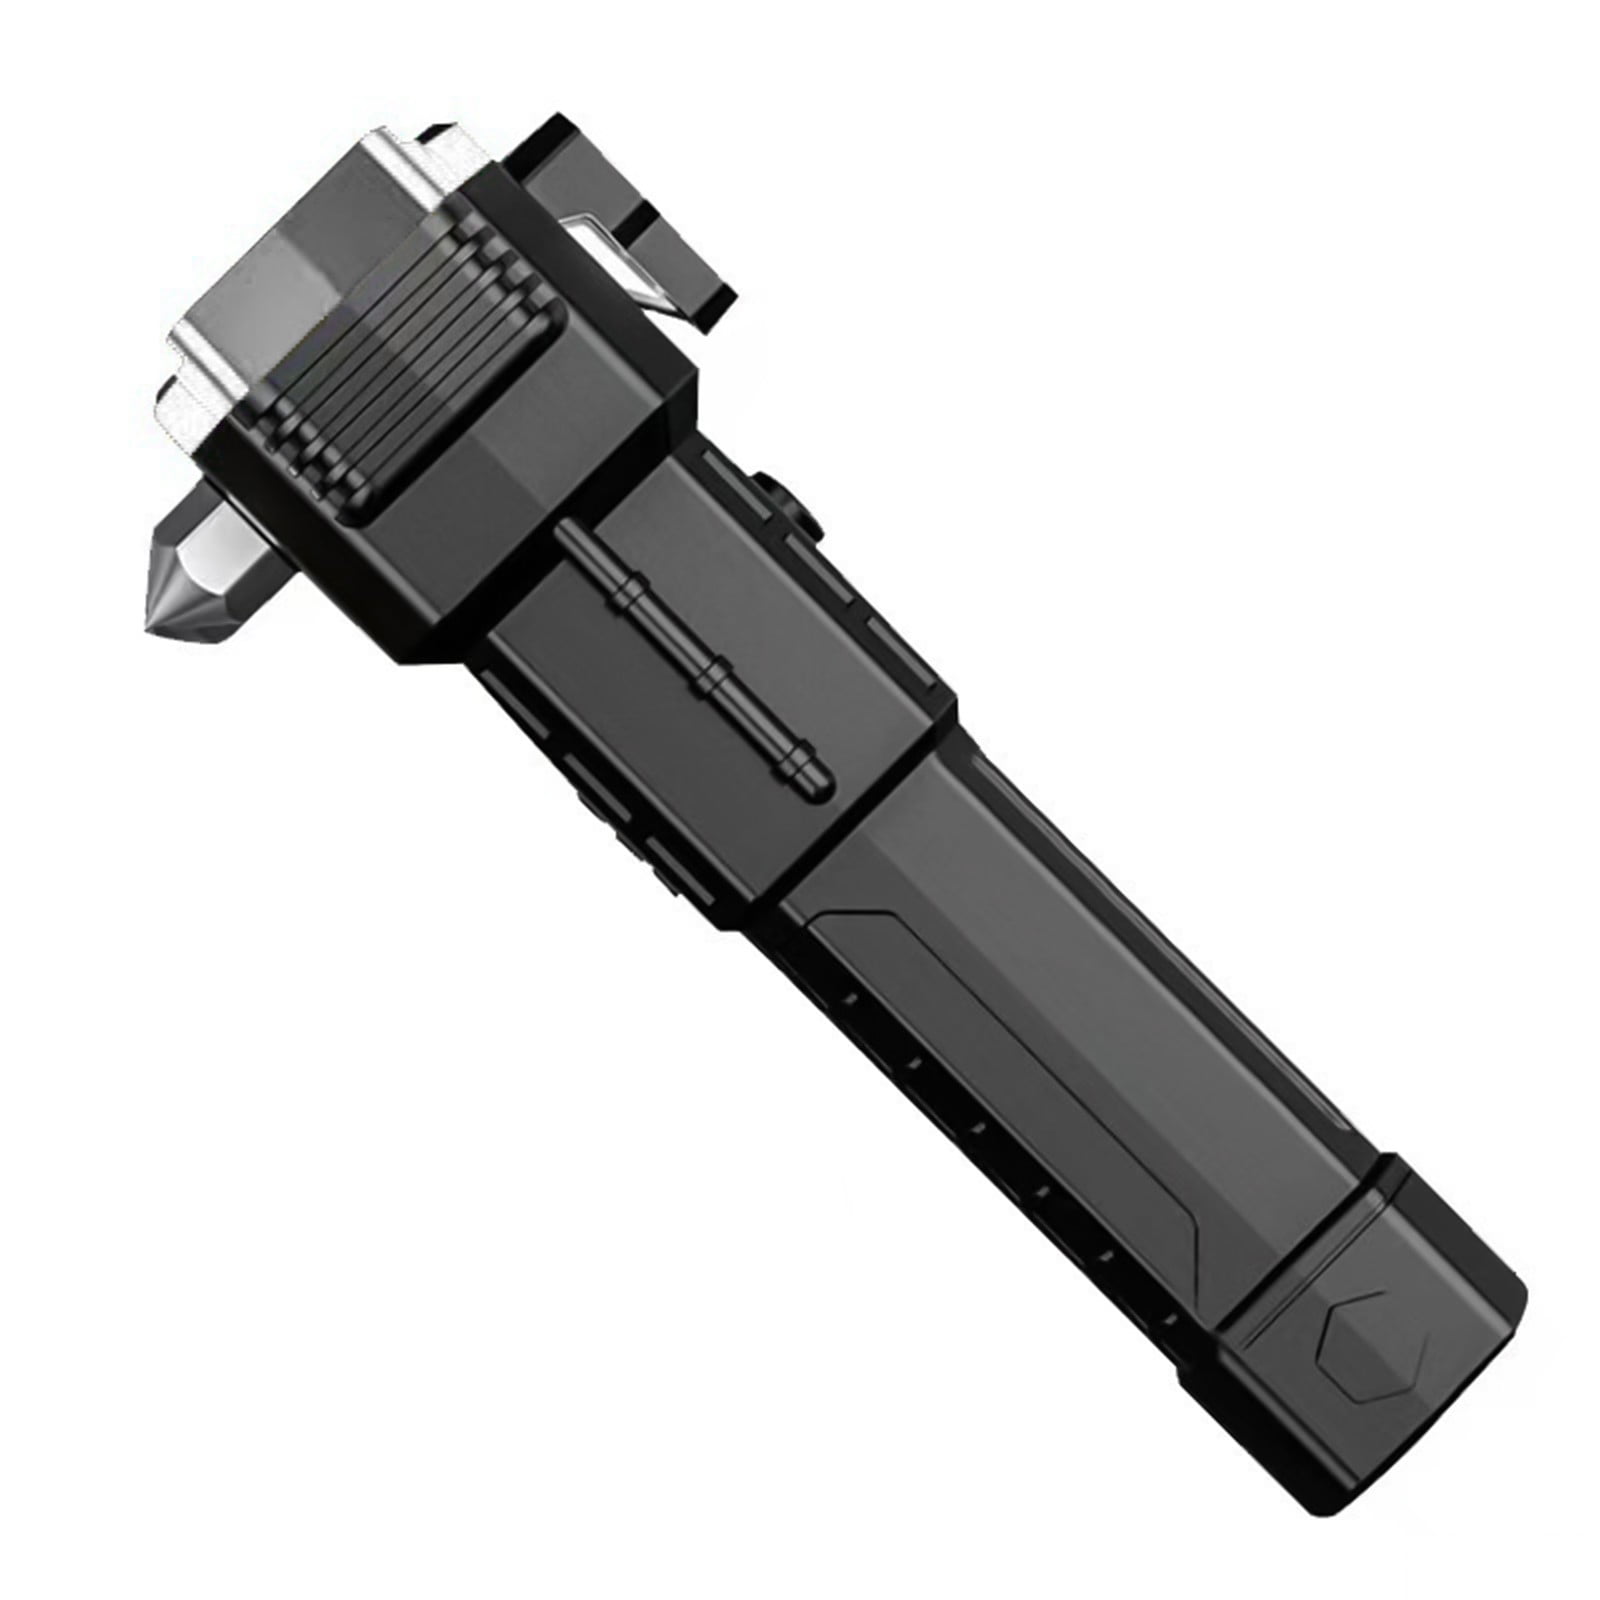 Neorosiri Emergency Escape Tool: Car Hammer Flashlight with Window Breaker and Seatbelt Cutter, Rechargeable LED High Lumens Flashlight